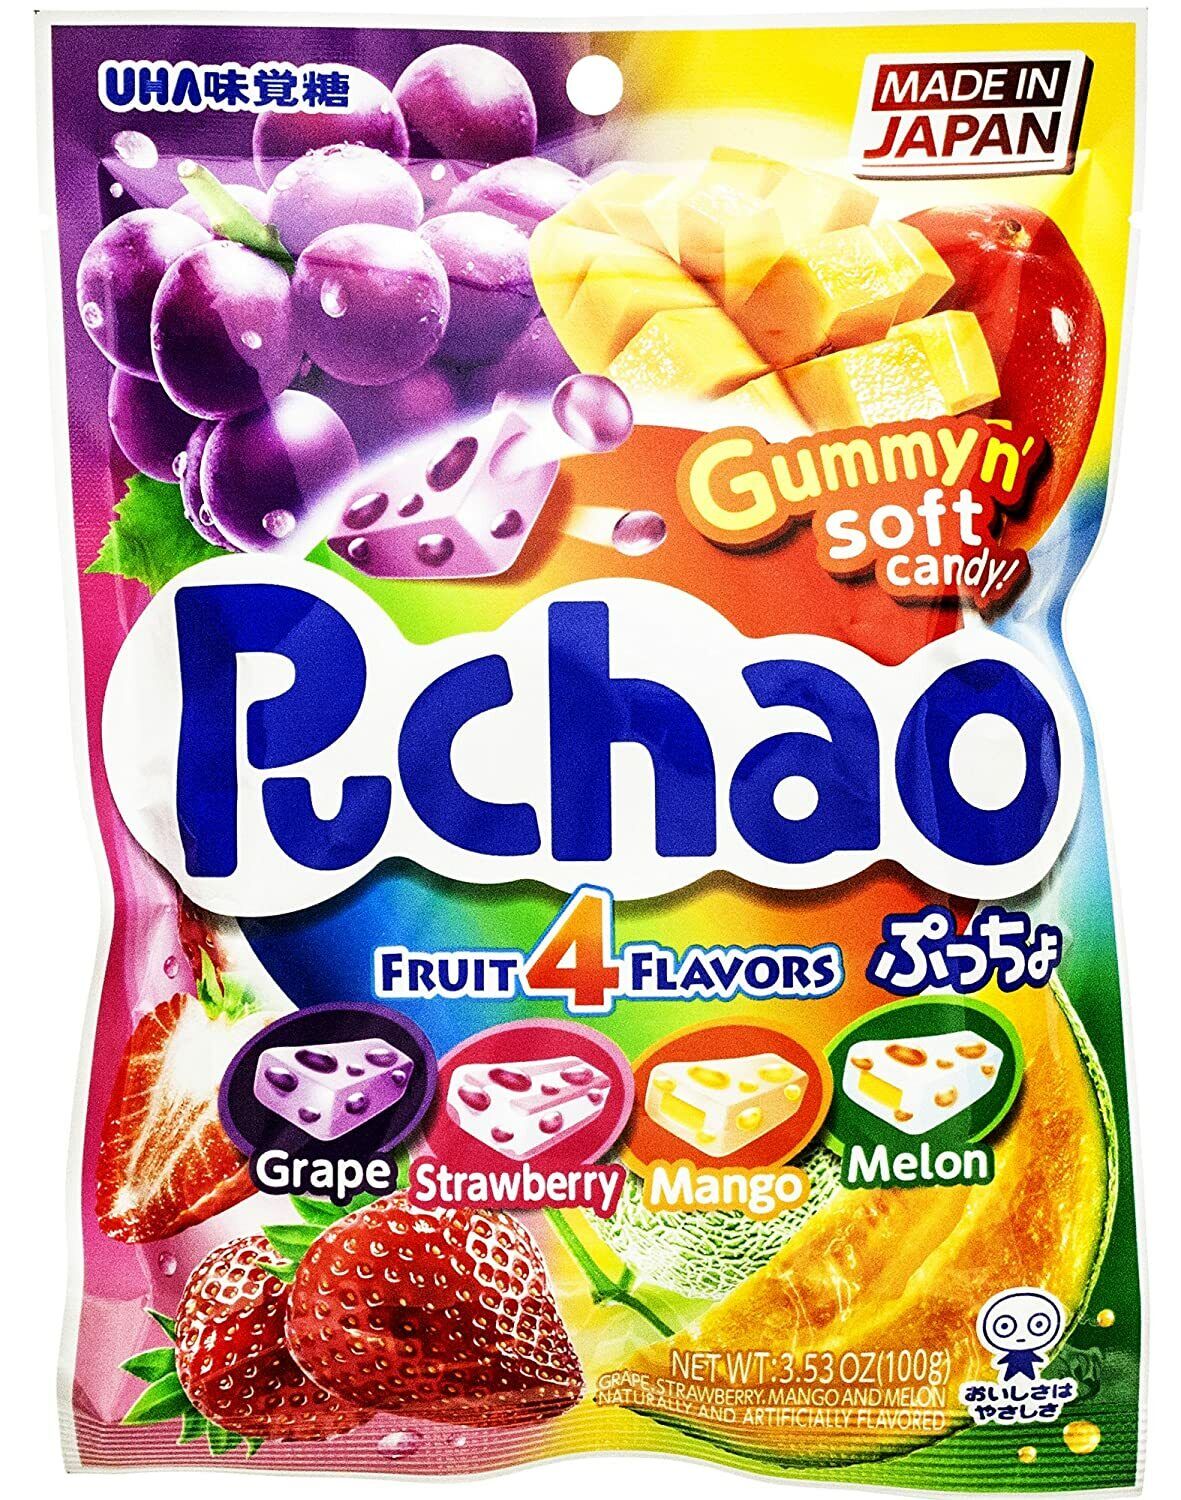 UHA -Puchao Gummy n' Soft Candy - 4 Flavors